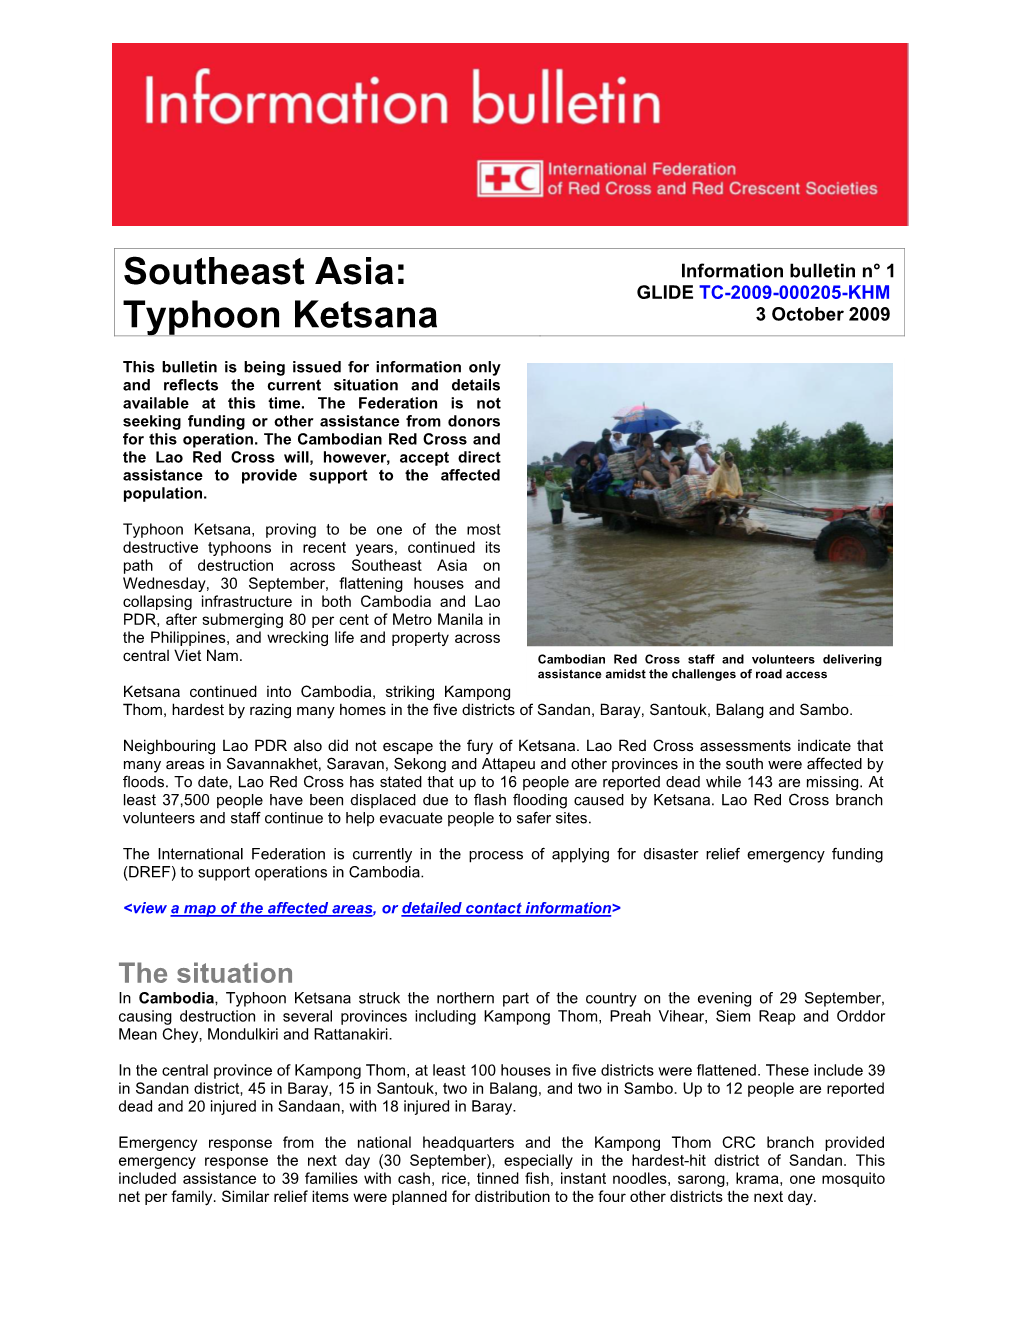 Southeast Asia: Typhoon Ketsana